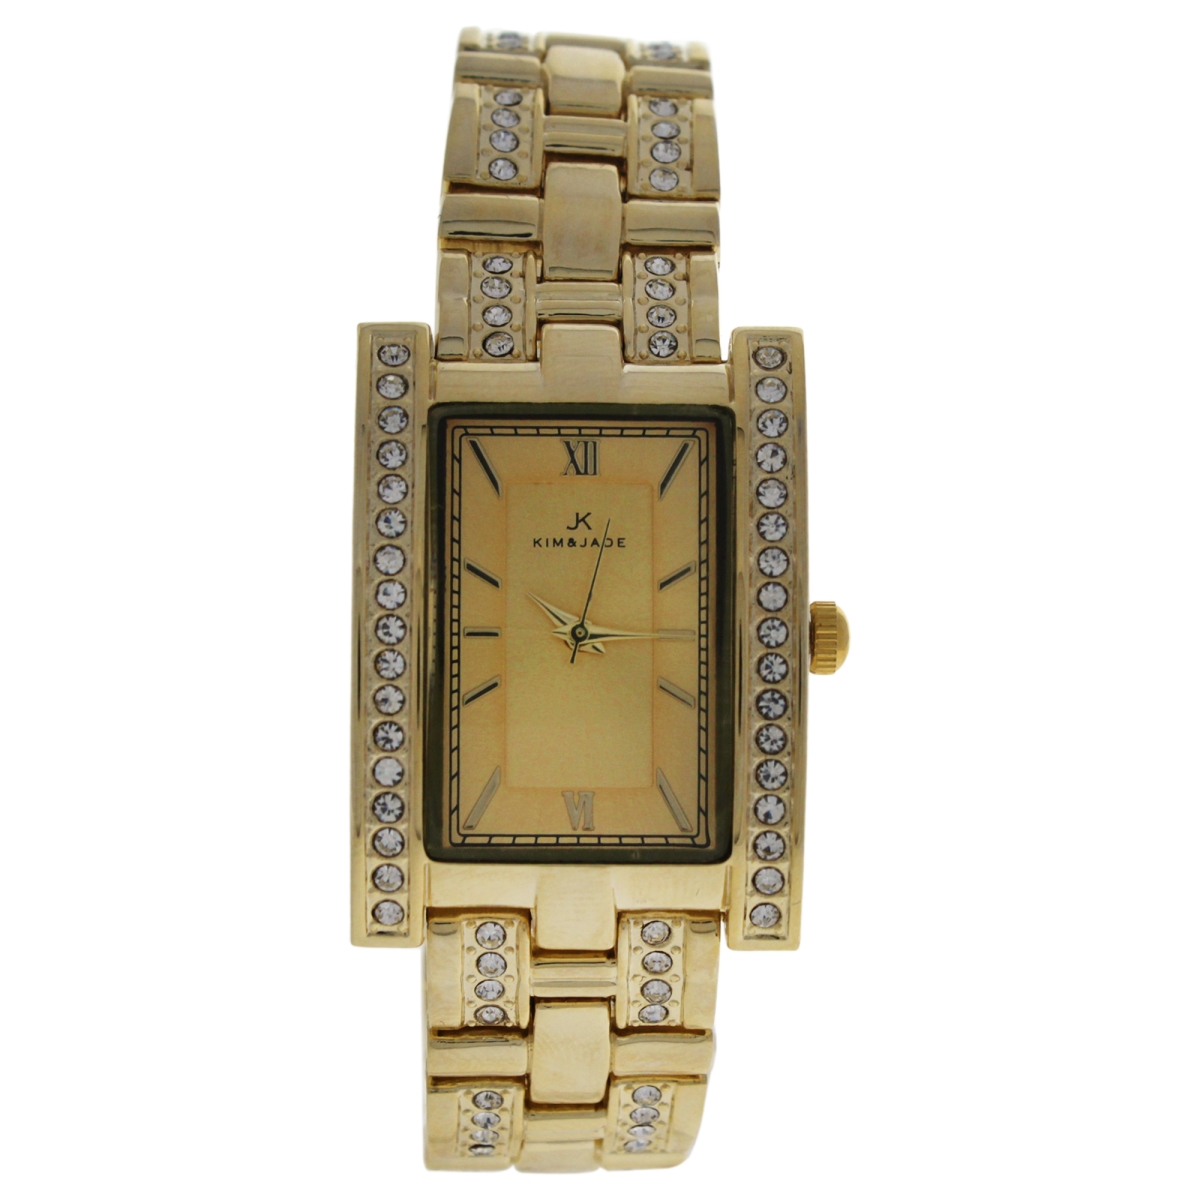 Picture of Kim & Jade W-WAT-1473 Gold Stainless Steel Bracelet Watch for Women - 2060L-GG